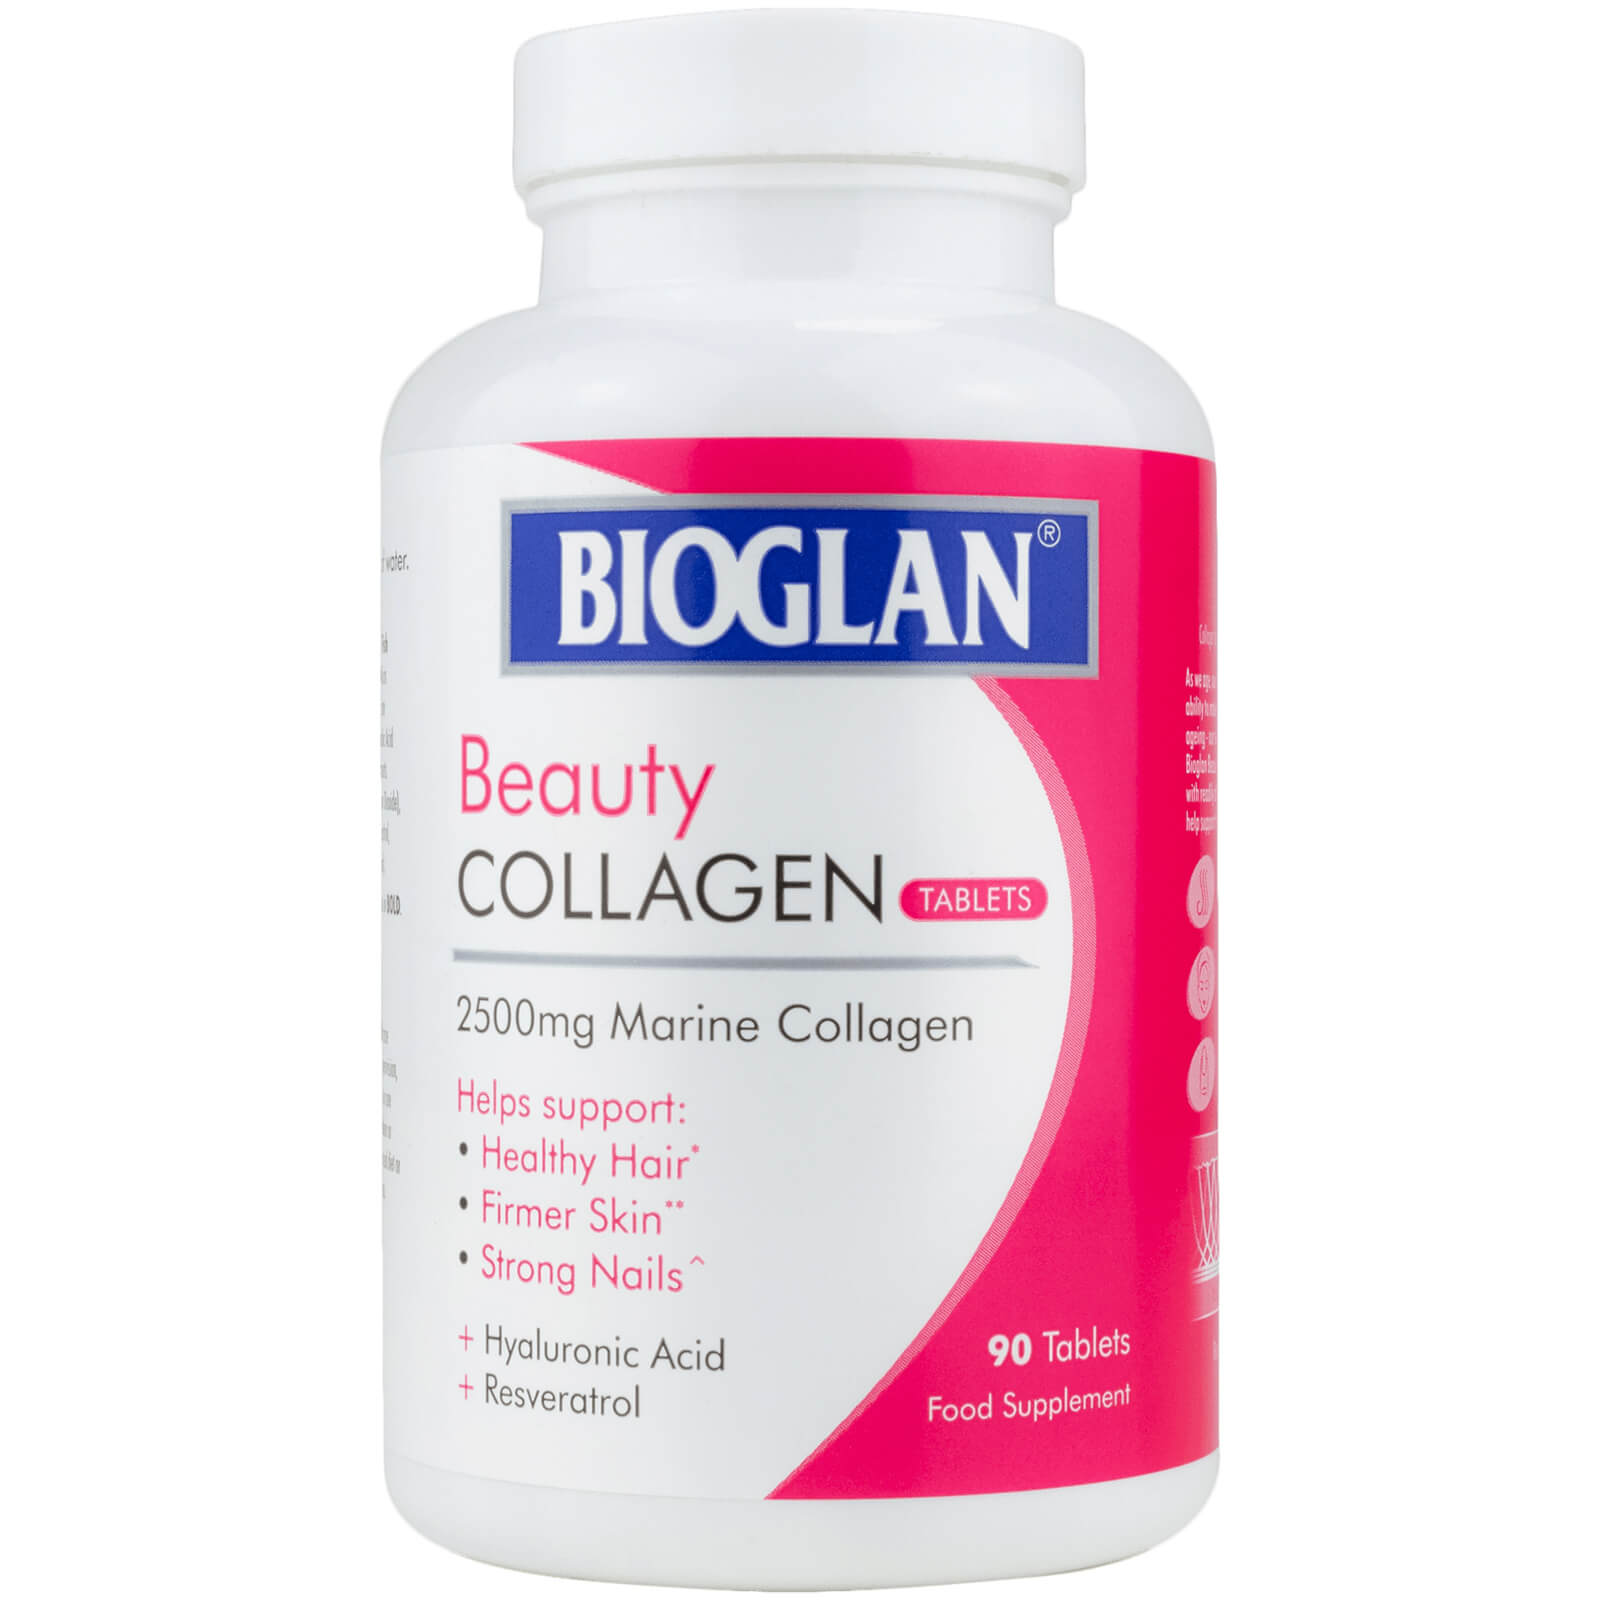 Bioglan Beauty Collagen Tablets (90 Tablets) lookfantastic.com imagine